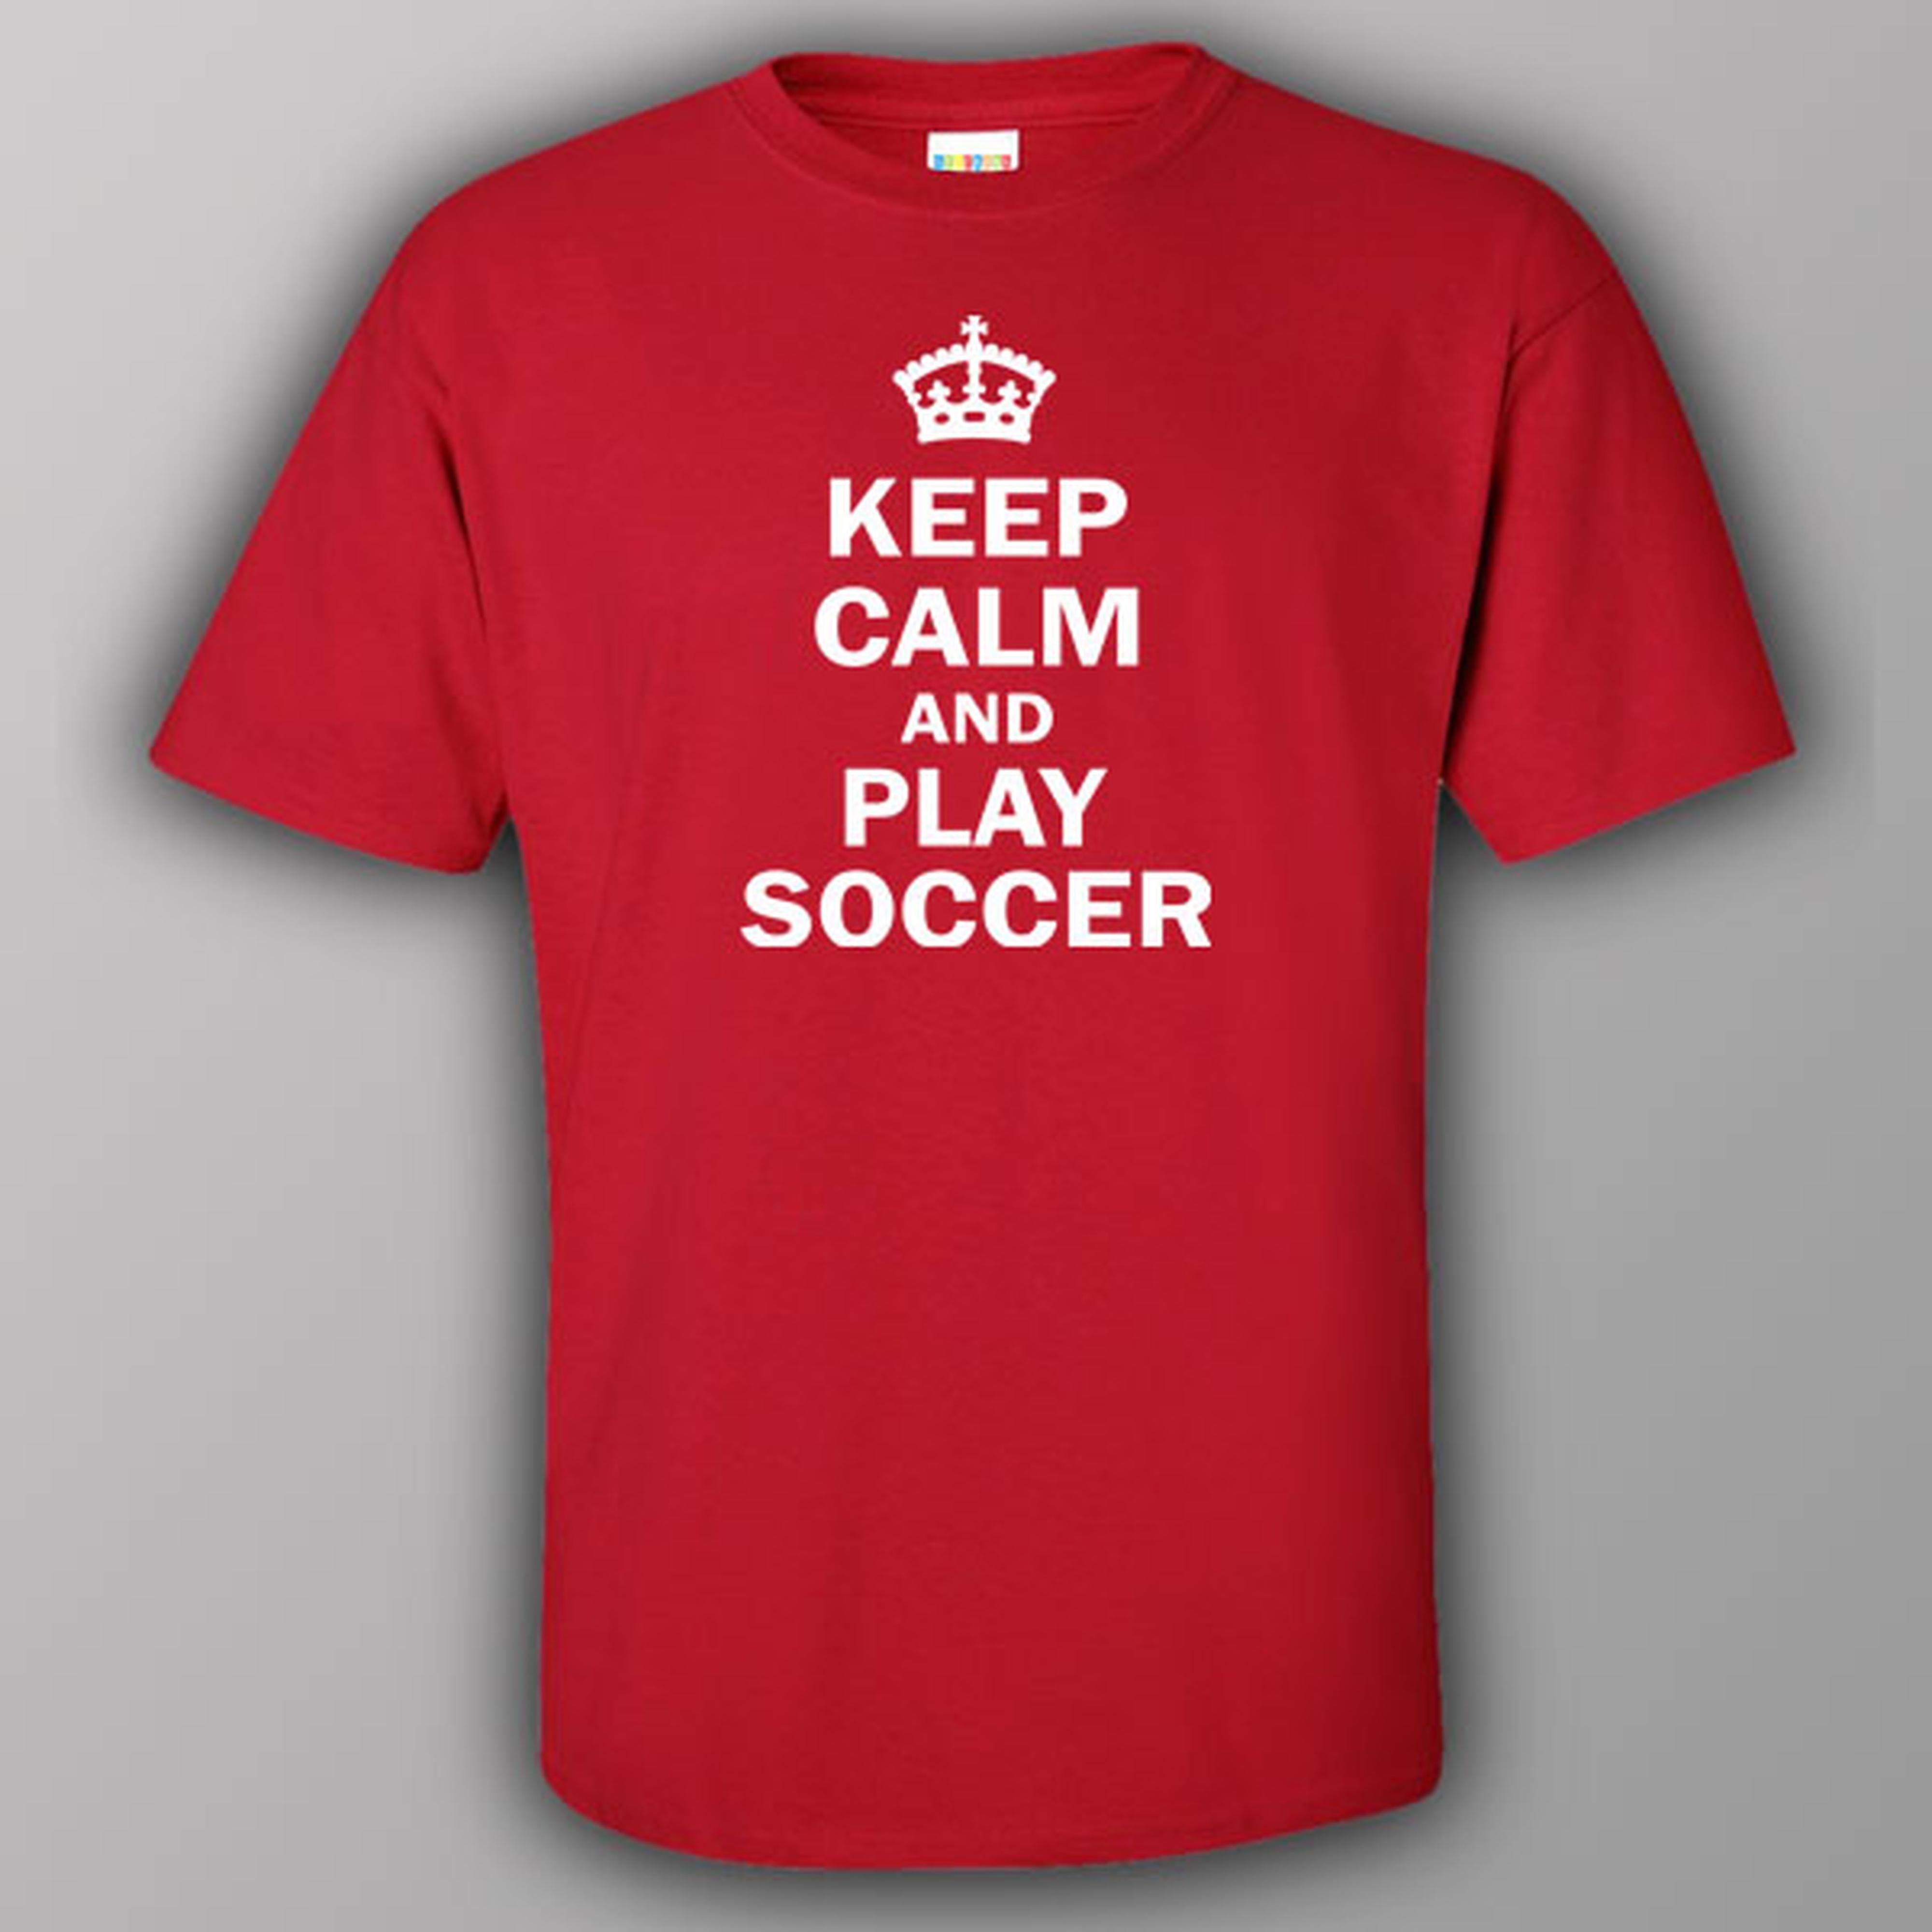 Keep calm and play soccer - T-shirt